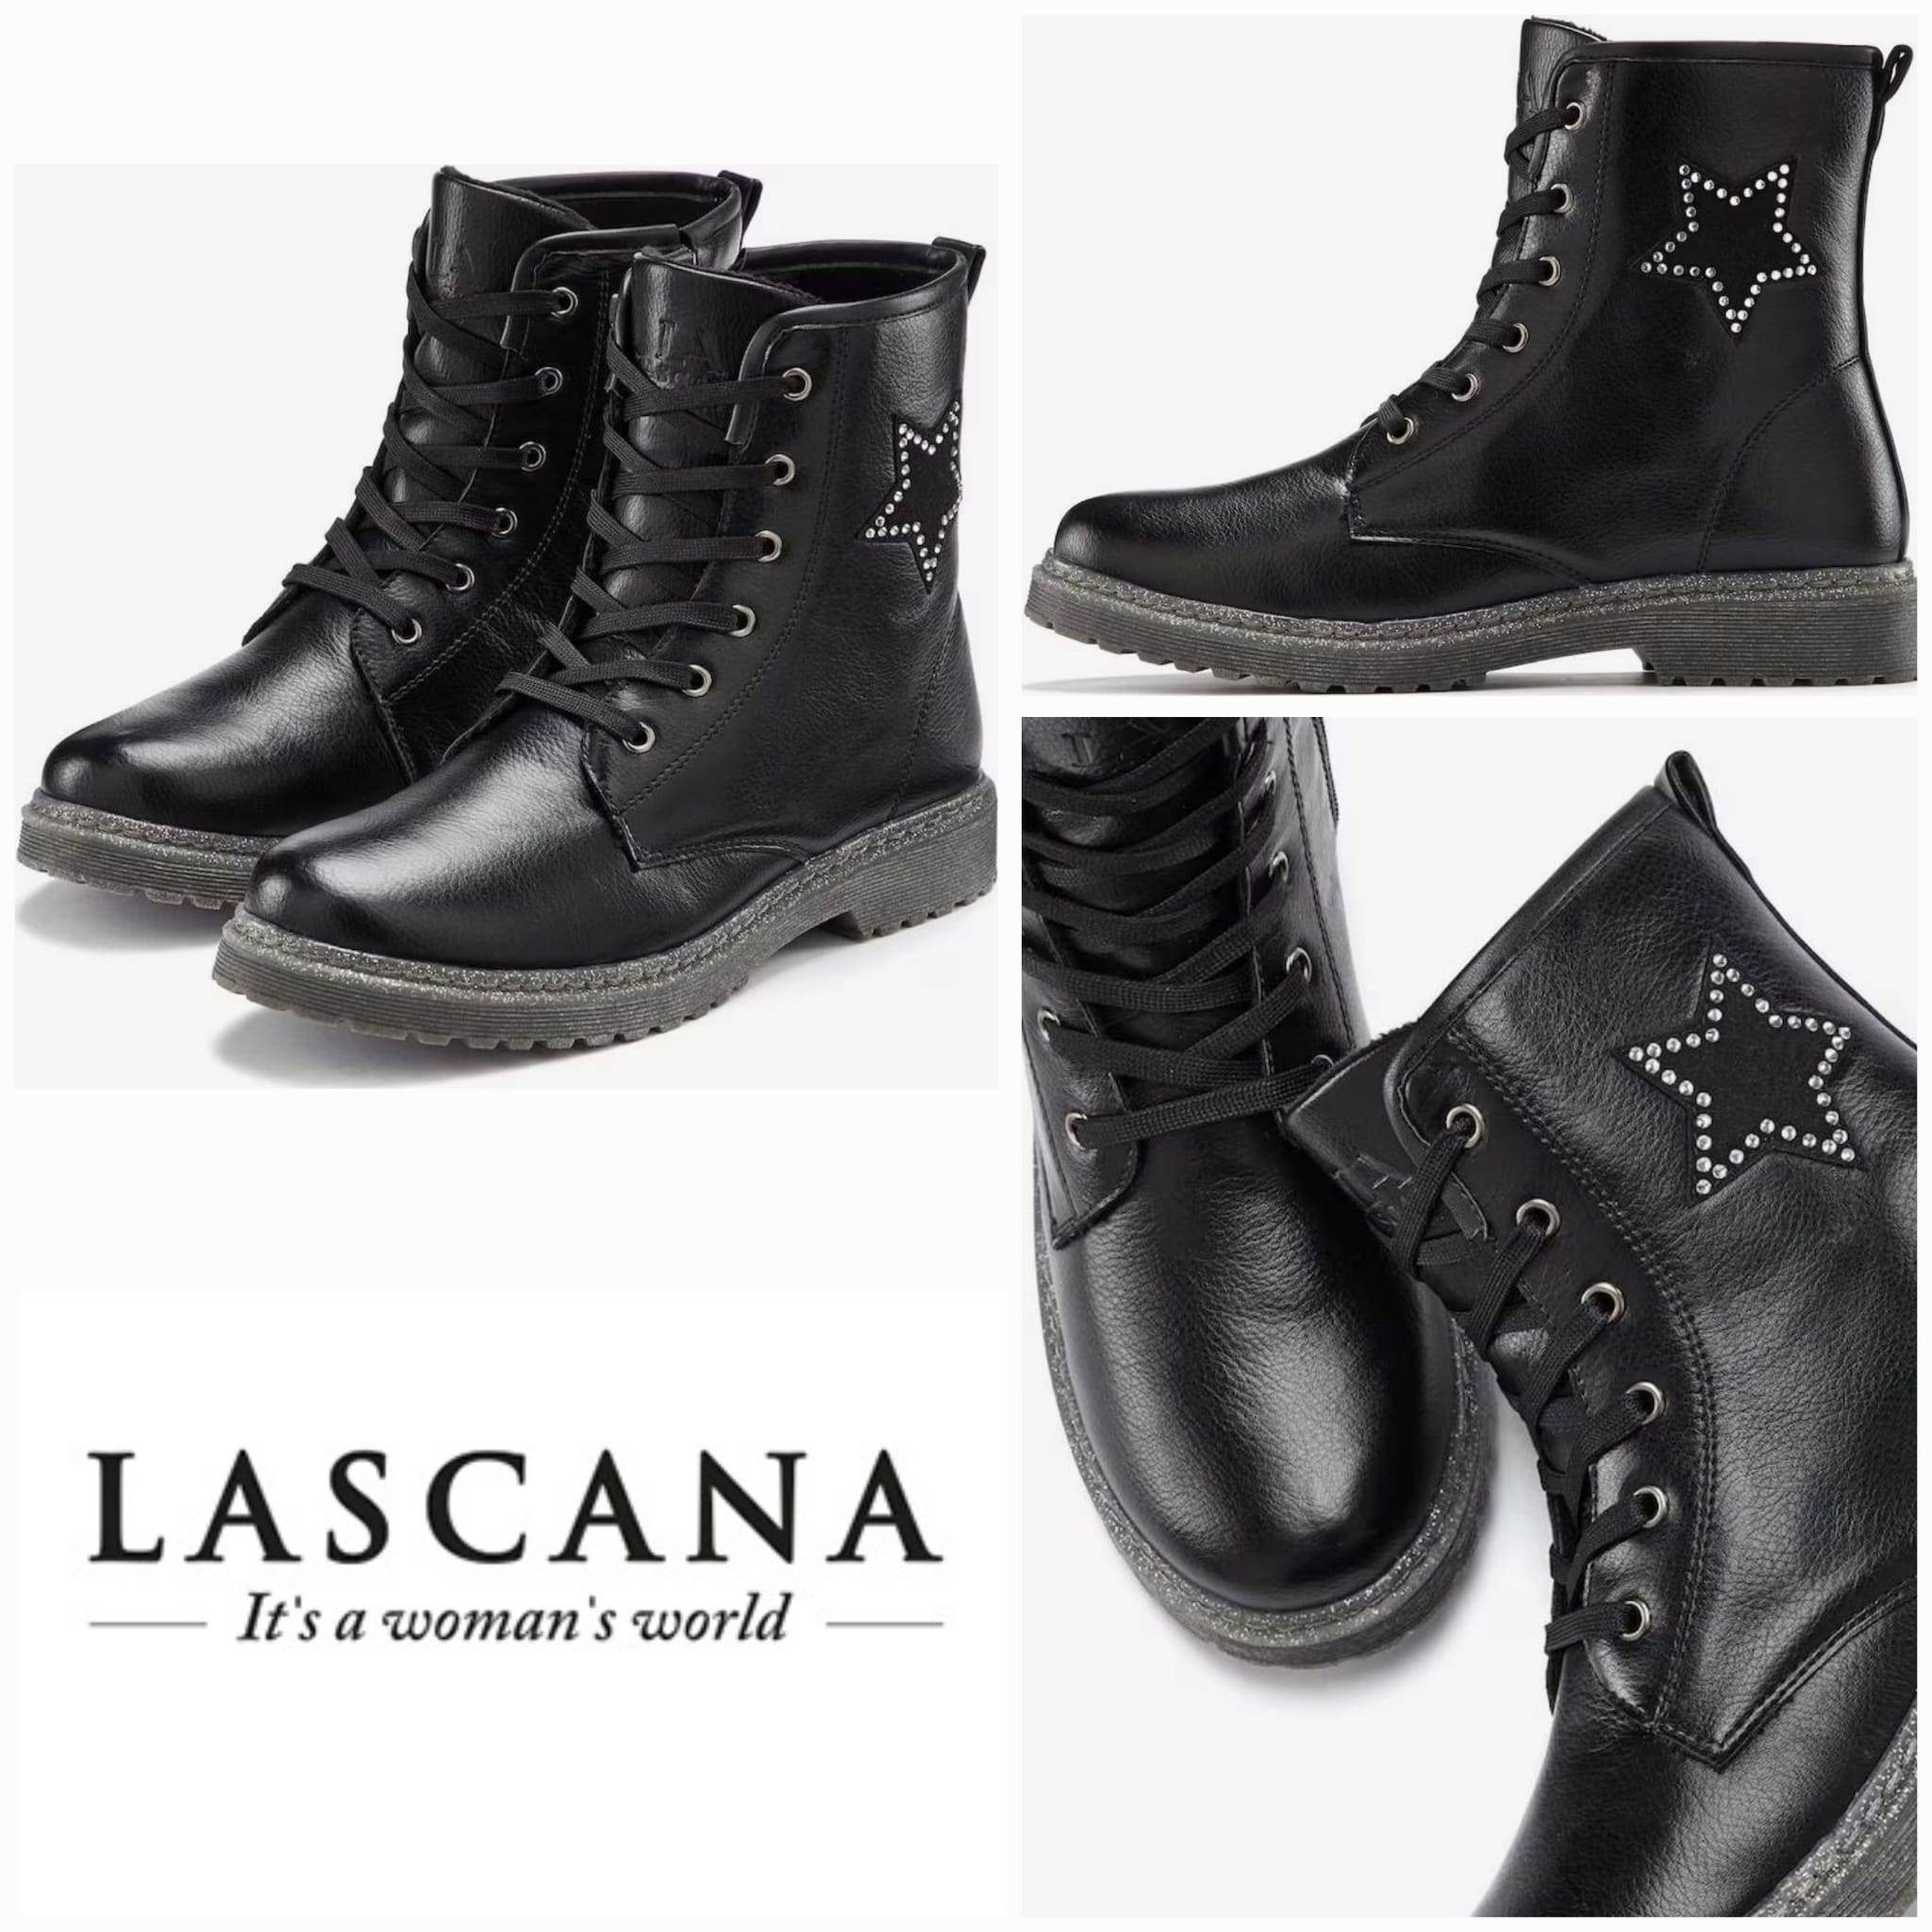 Women's black boots by Lascana